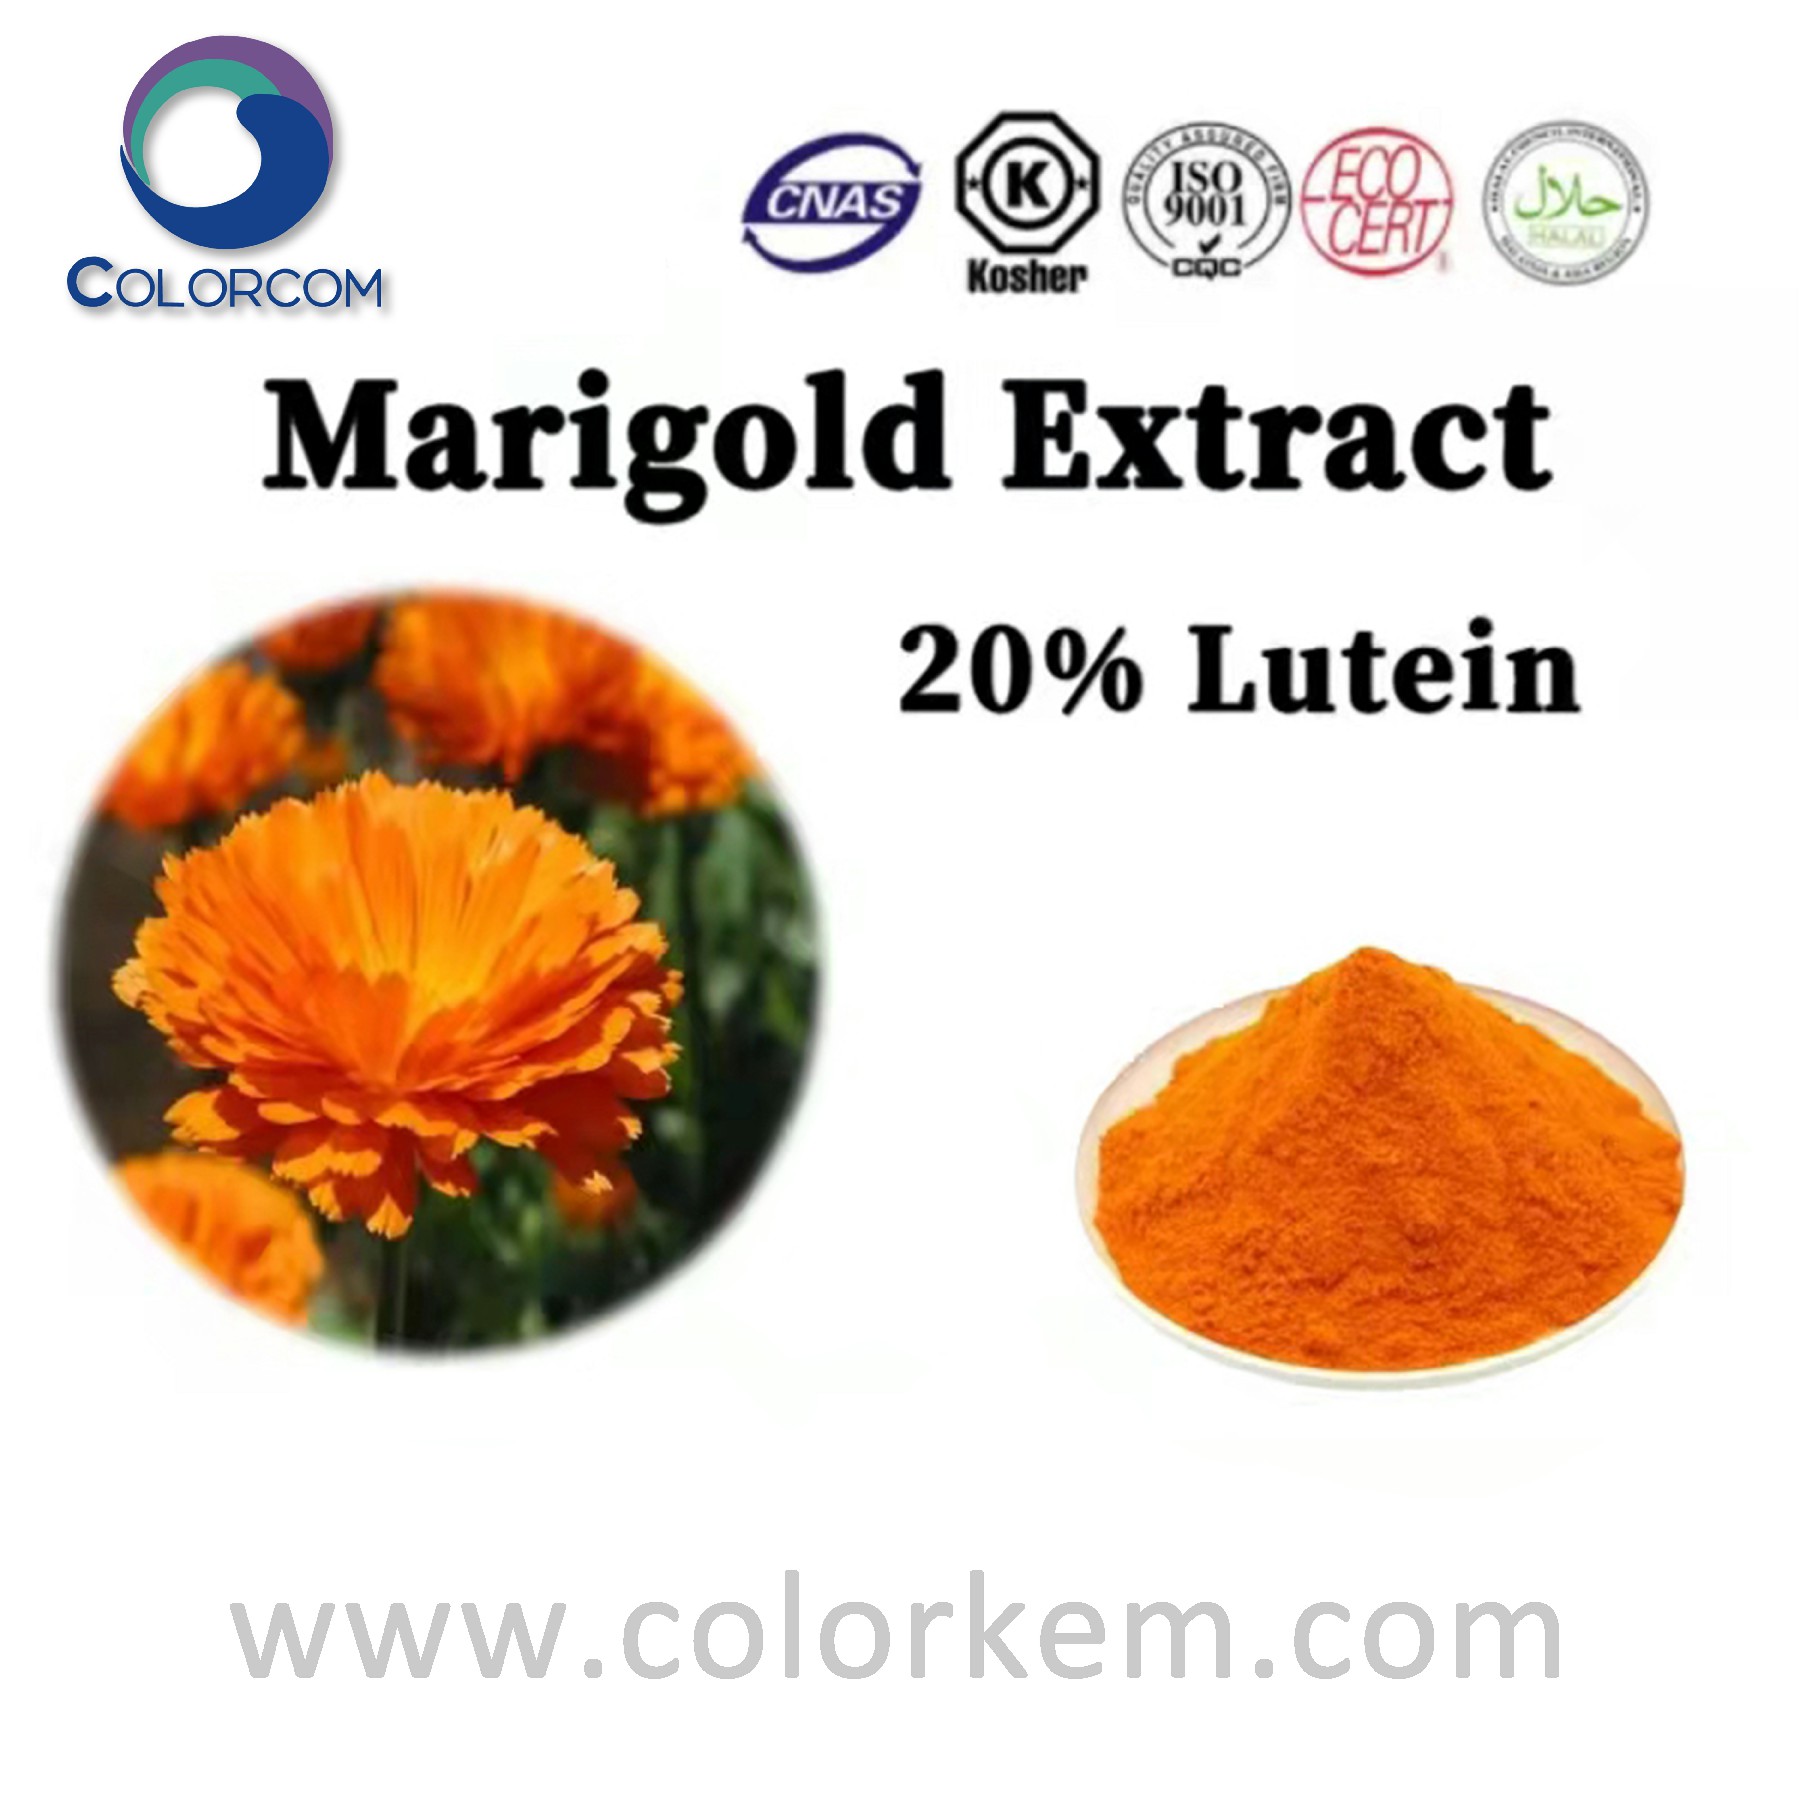 marigold extract lutein